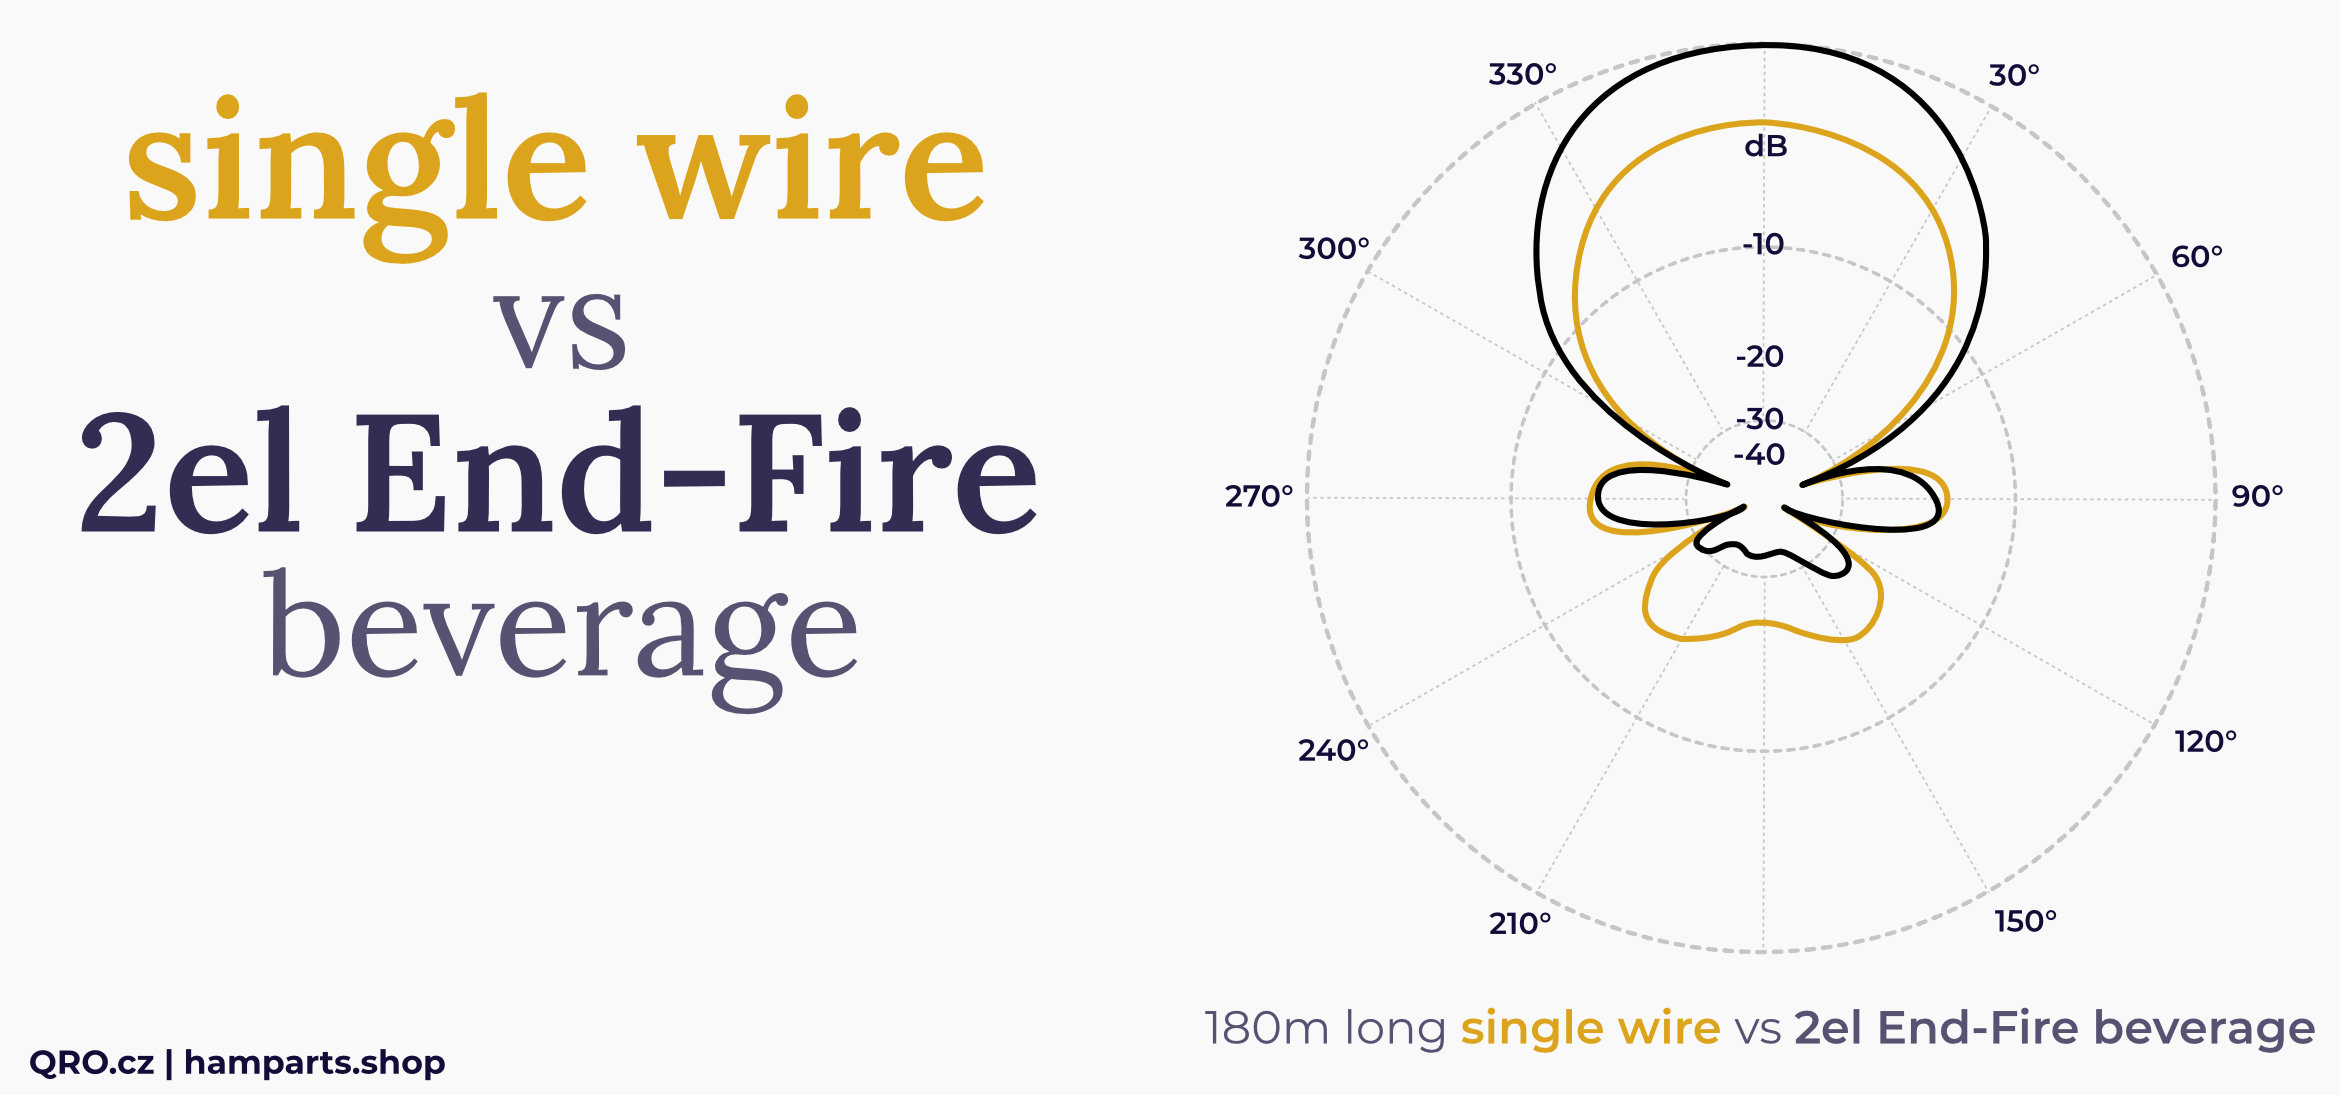 example of comparison 2el end fire single wire beverage by qro.cz hamparts.shop